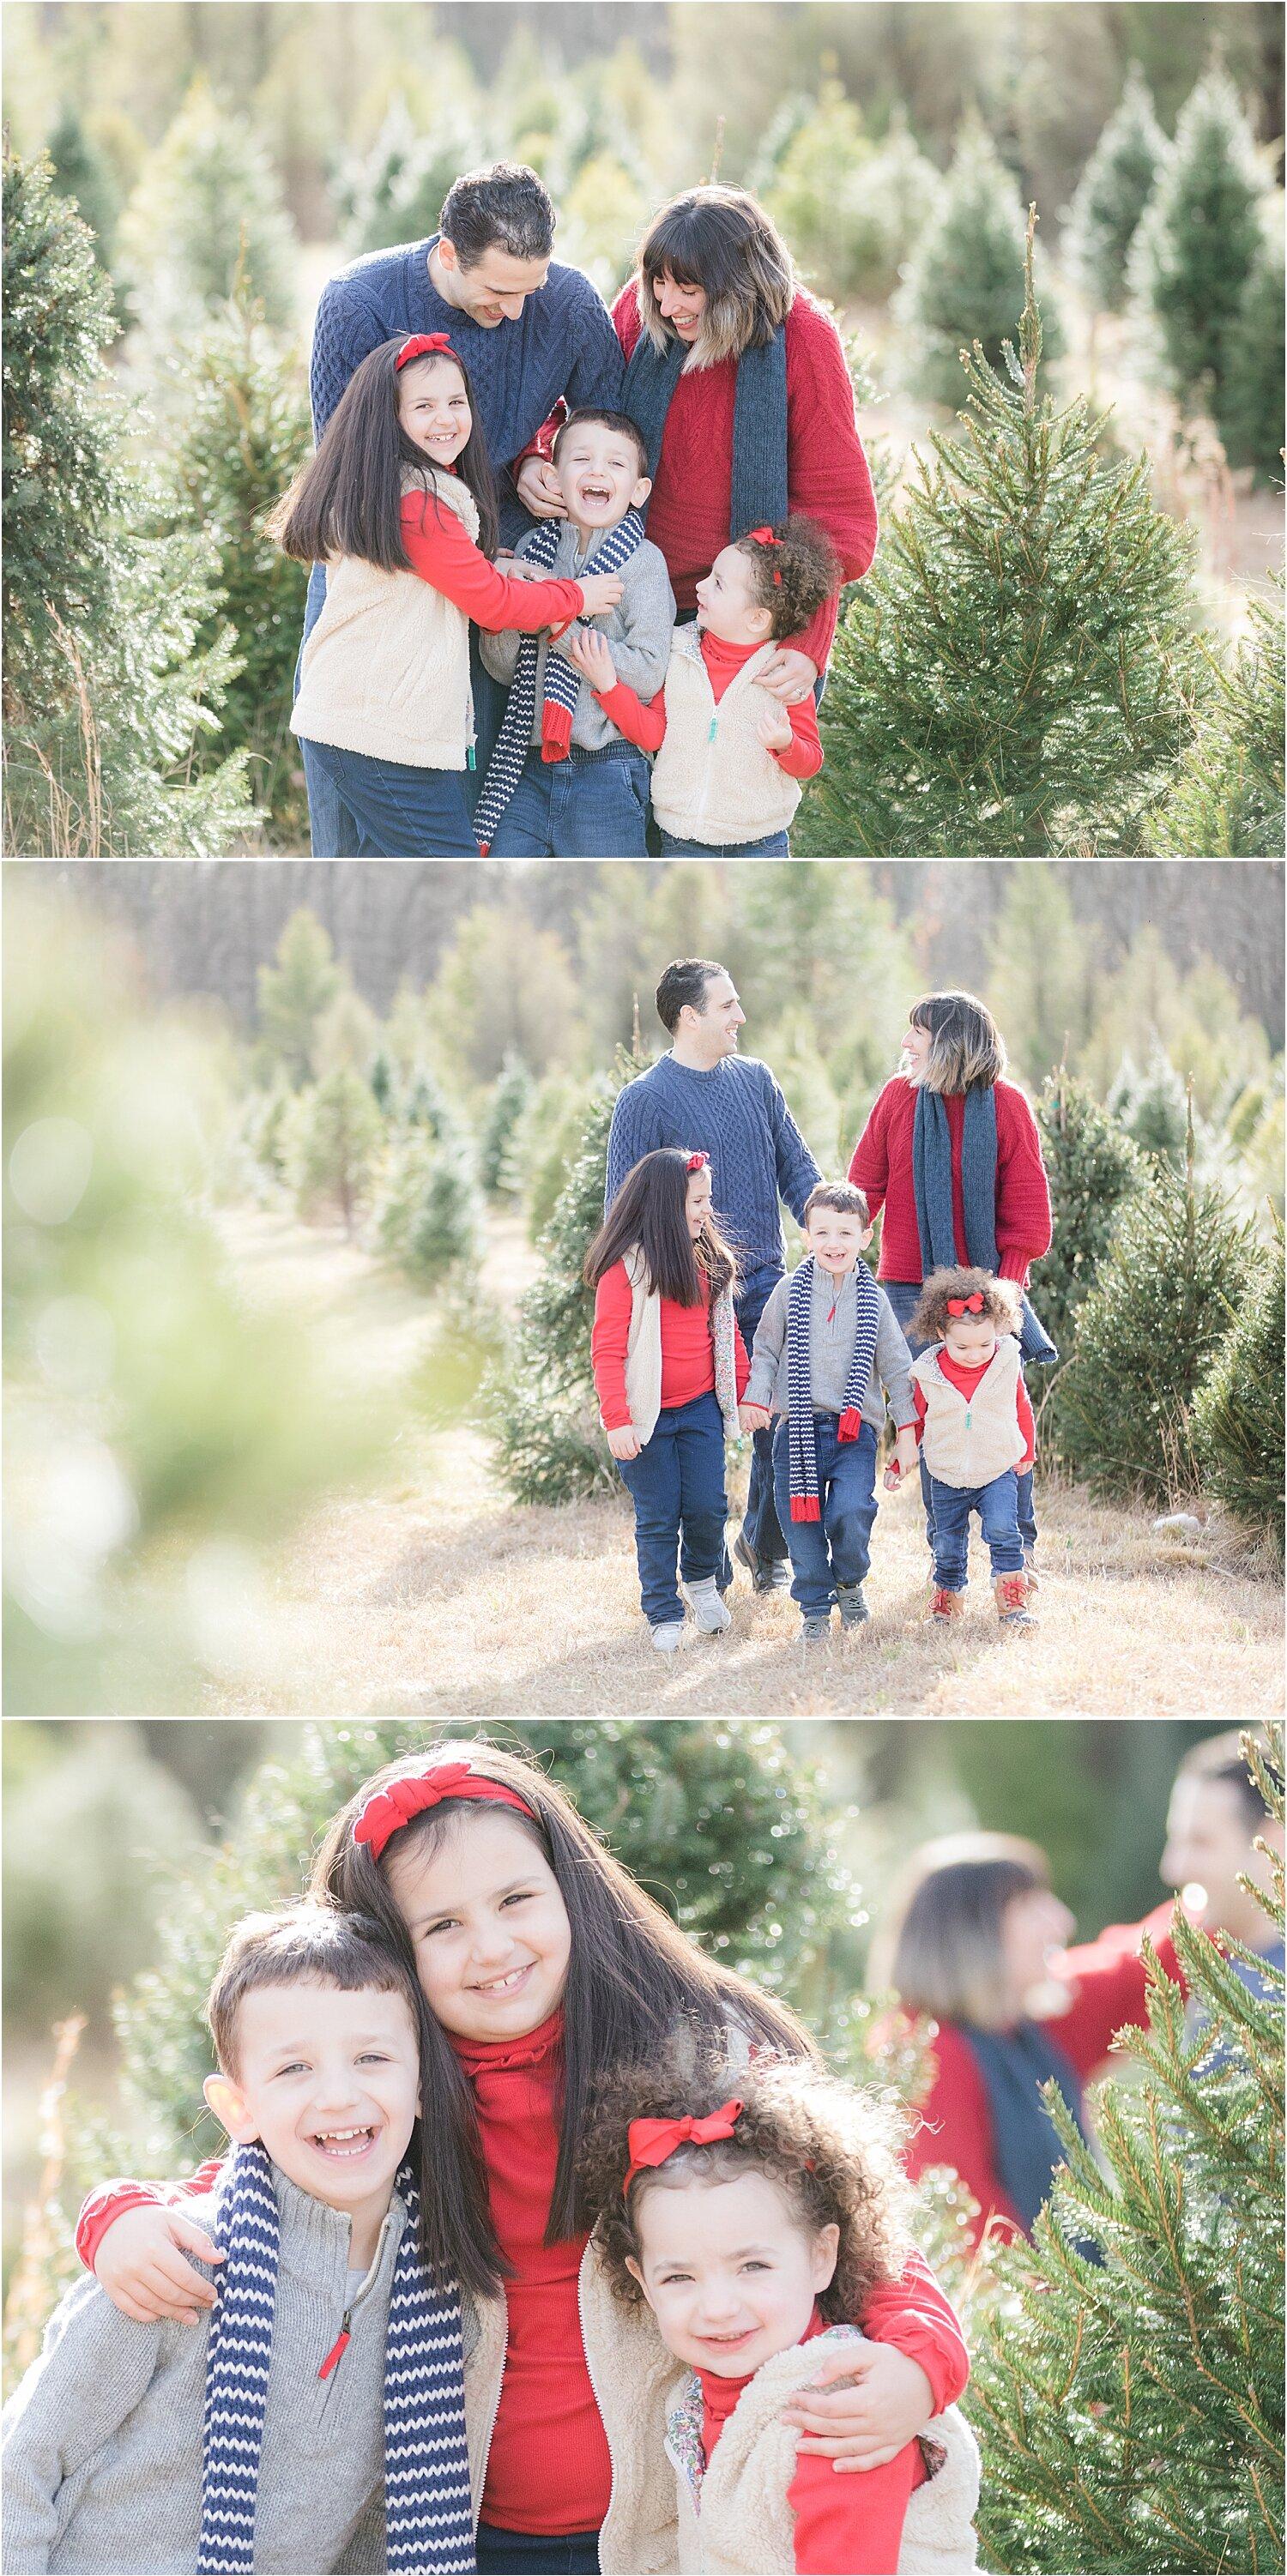 Family Holiday Photos At A Tree Farm In Nj Natural Light